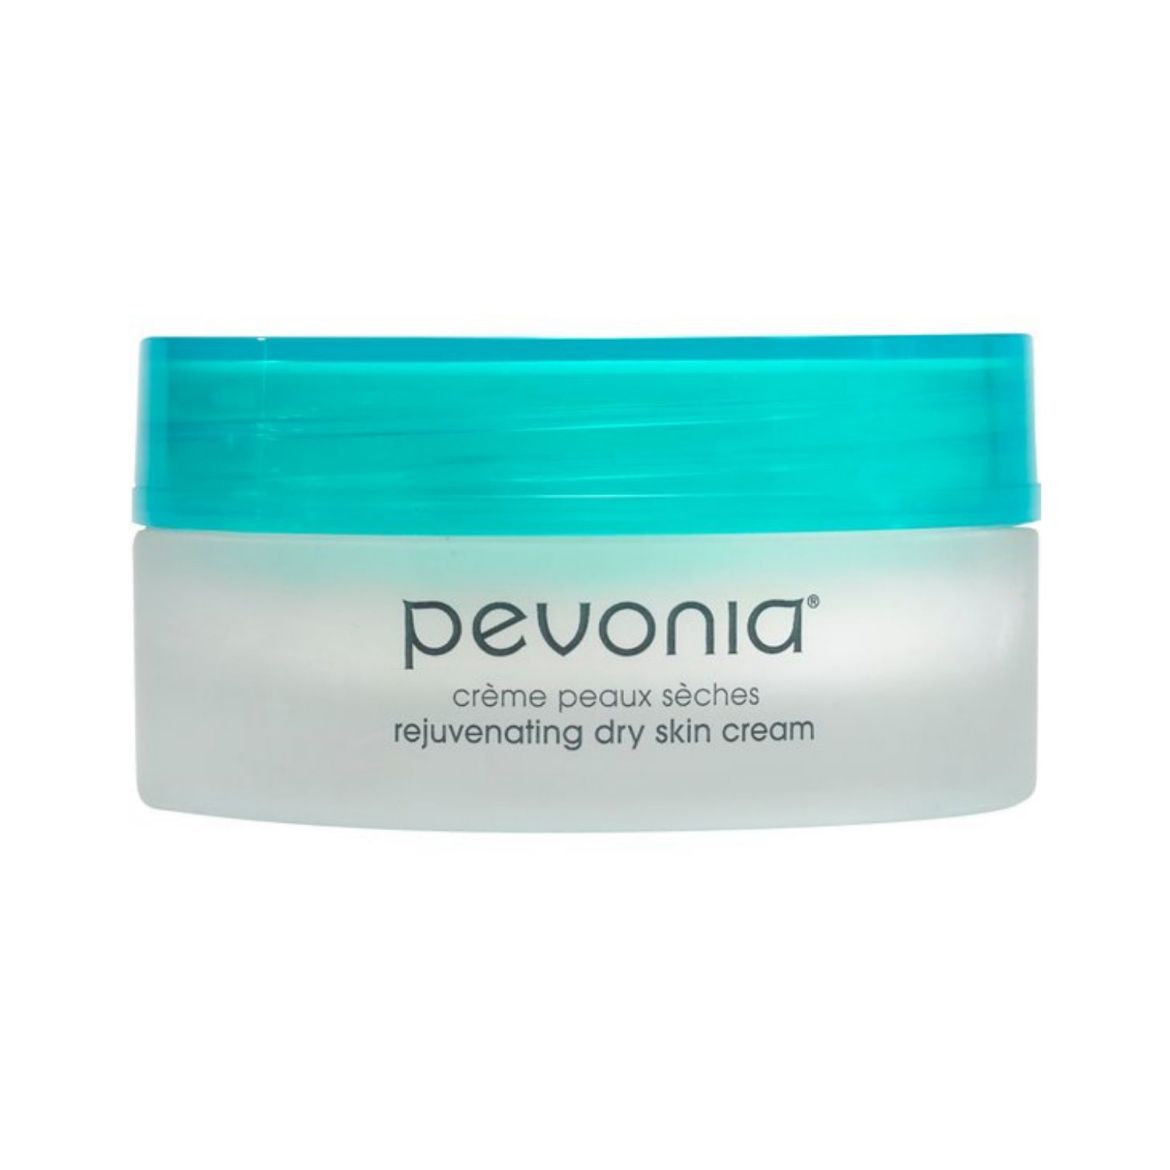 Bild von Pevonia Rejuvenating Dry Skin Cream (50ml)